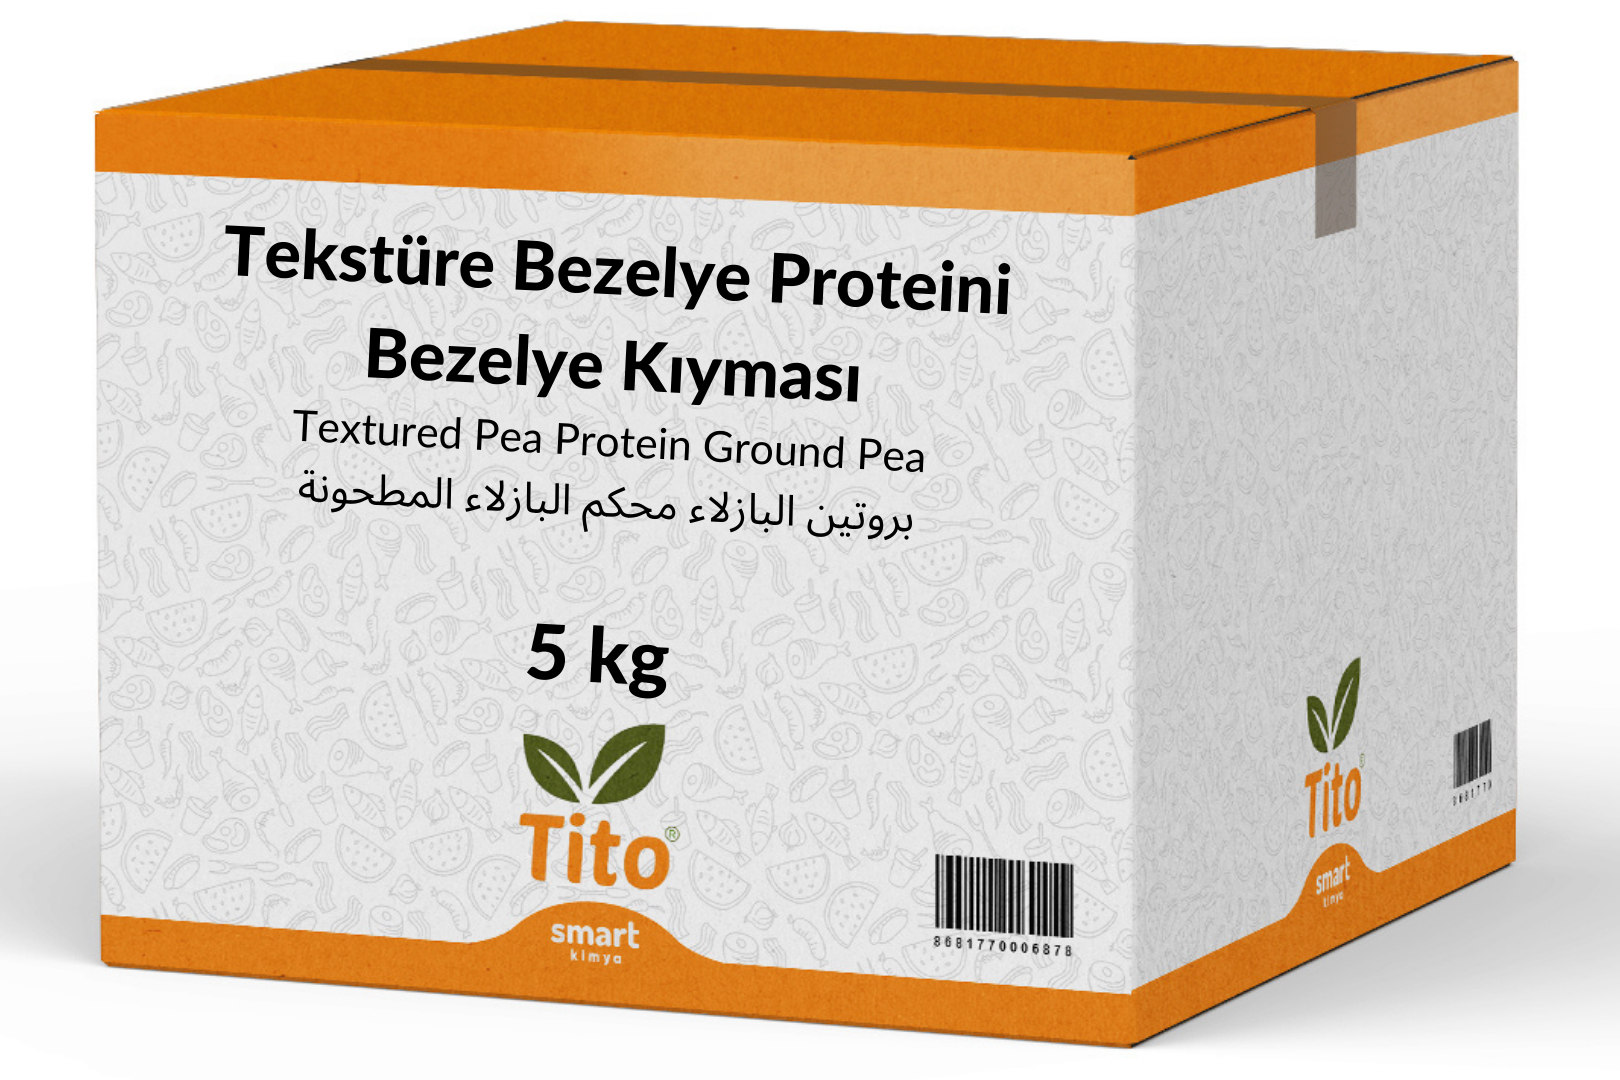 Tekstüre Bezelye Proteini (Bezelye Kıyması) 5 kg